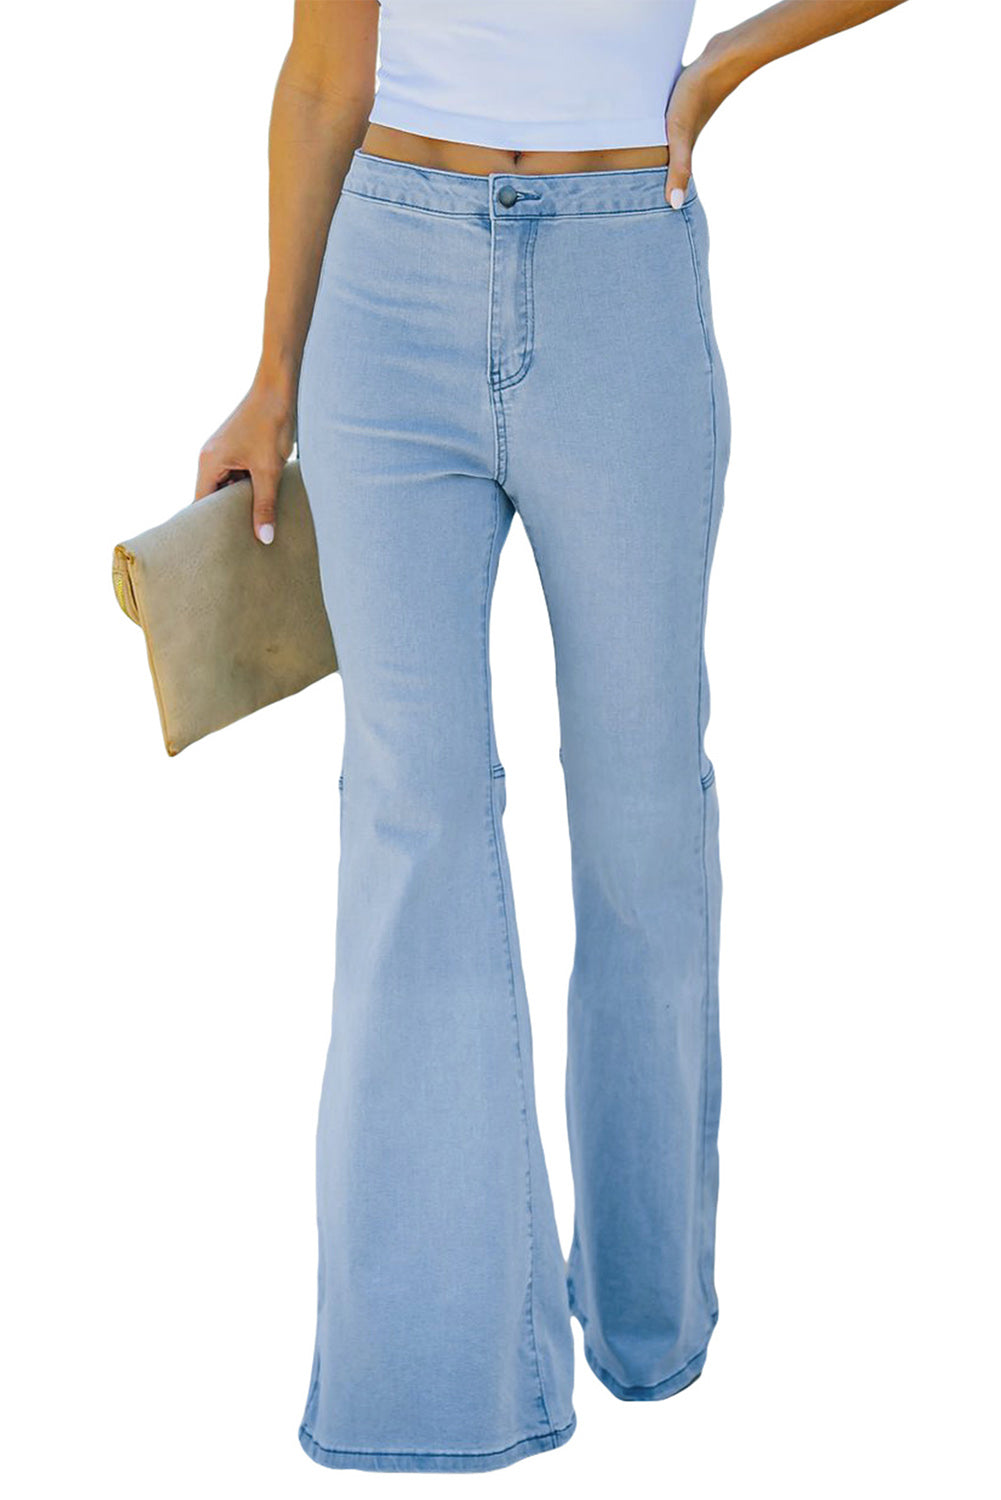 Sky Blue High Waist Pockets Bell Jeans Jeans JT's Designer Fashion